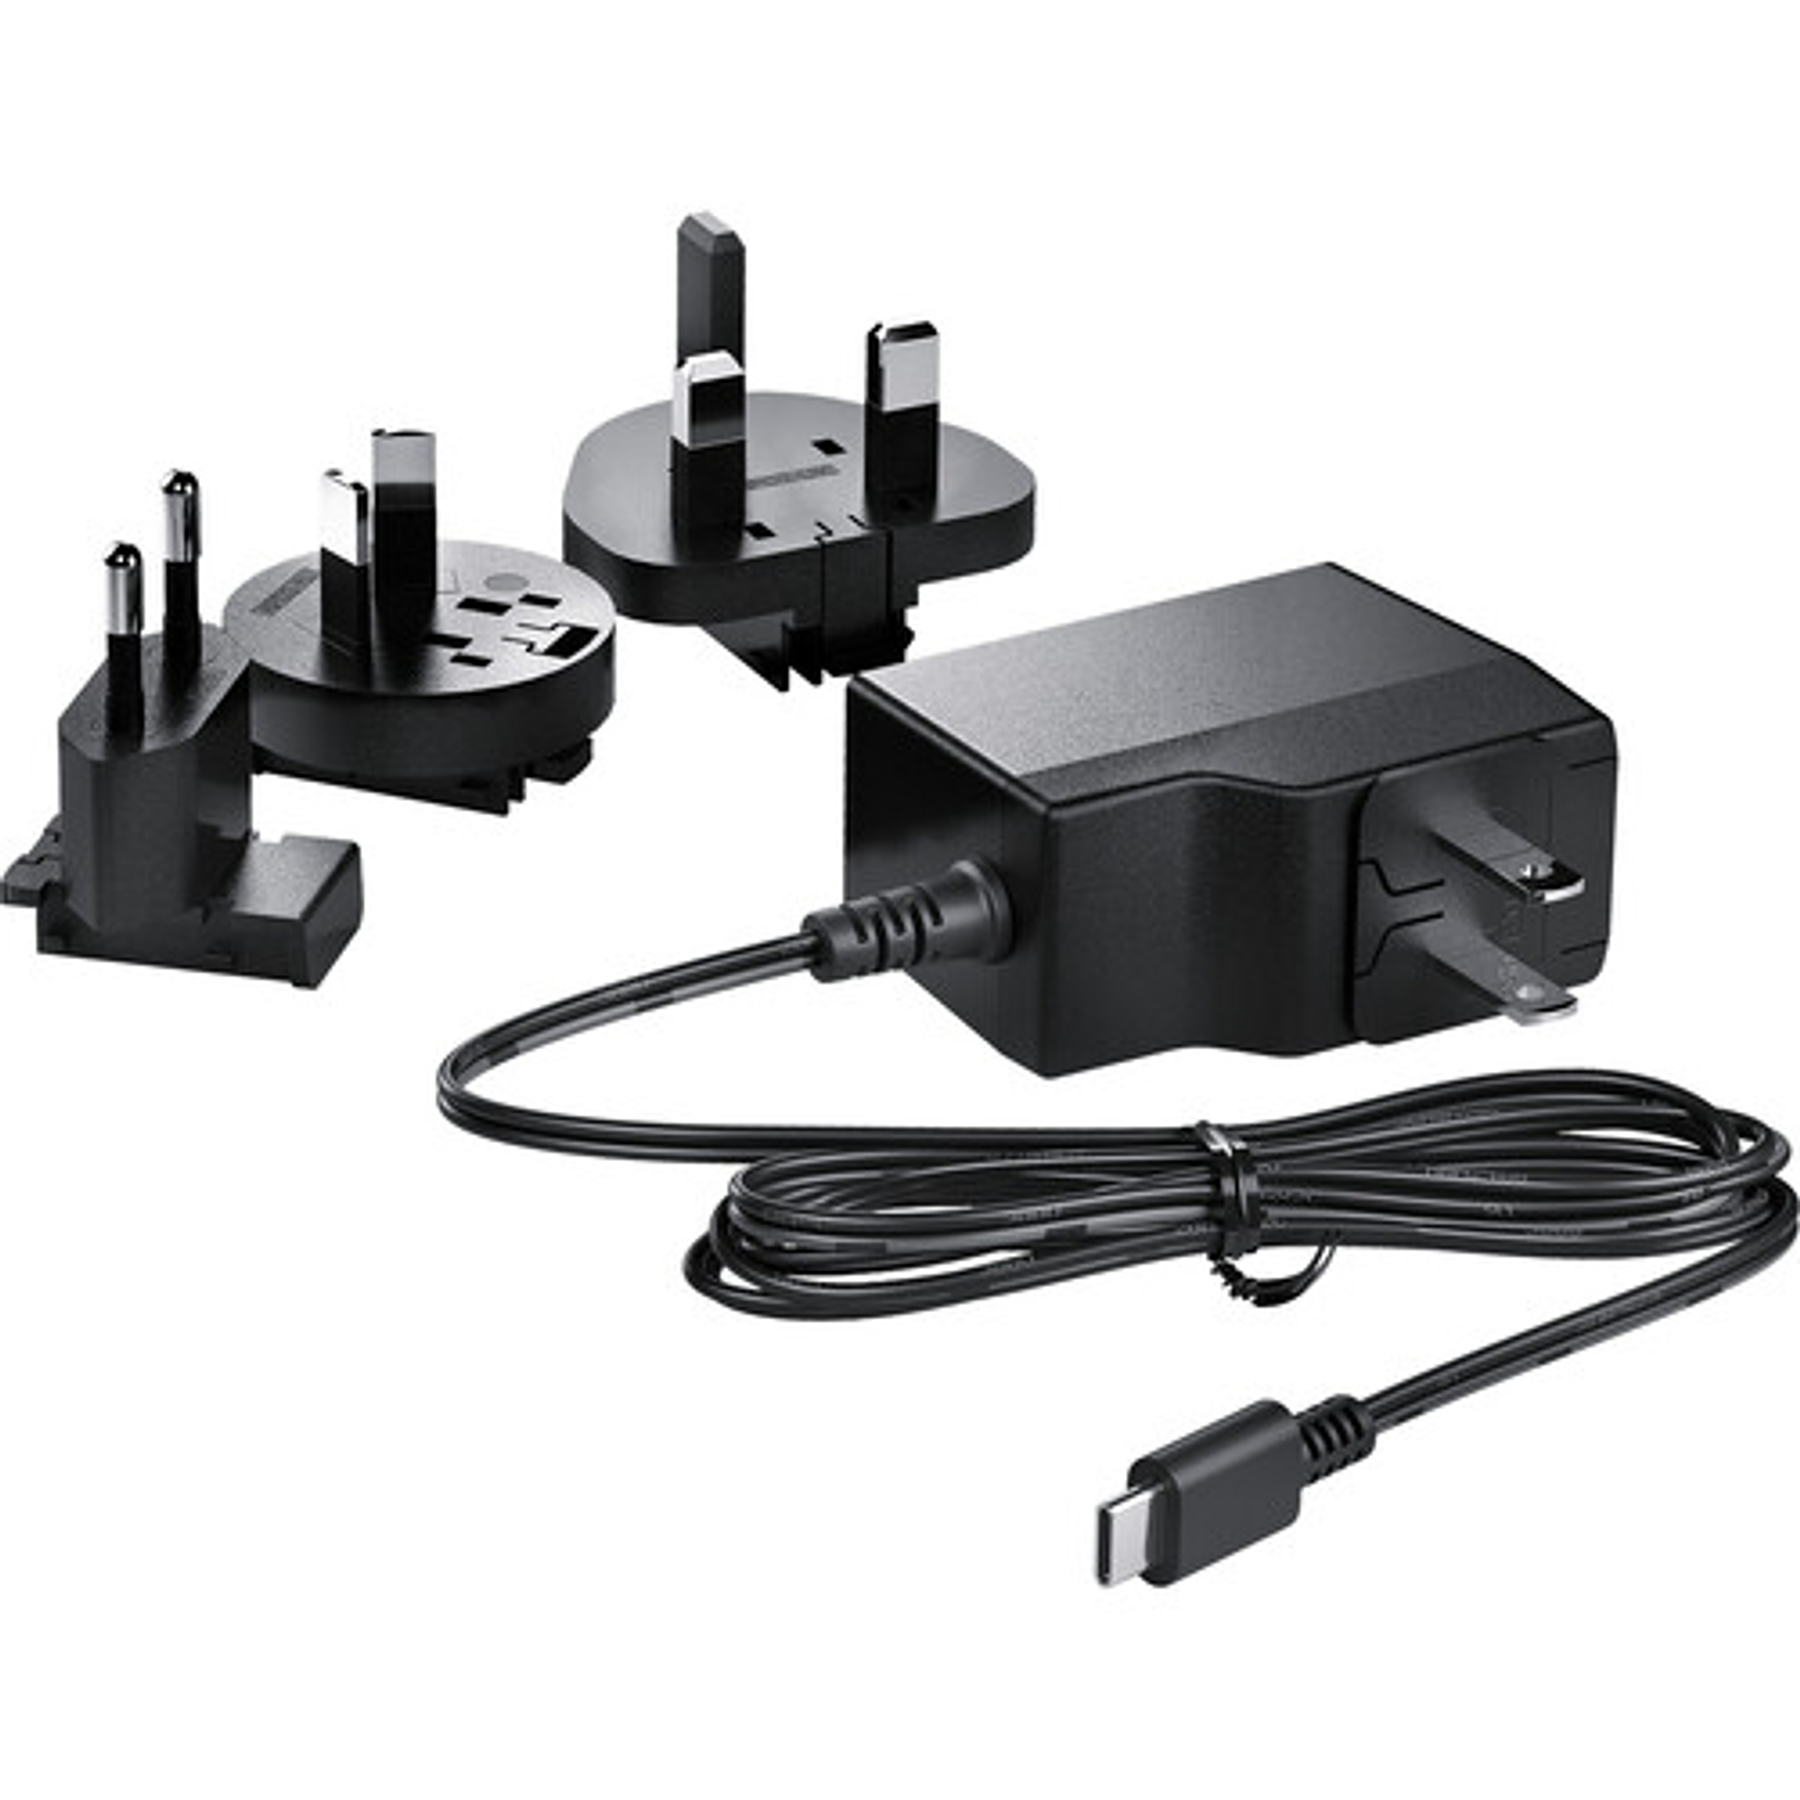 Blackmagic Design Micro Convertidor SDI a HDMI 3G con PSU